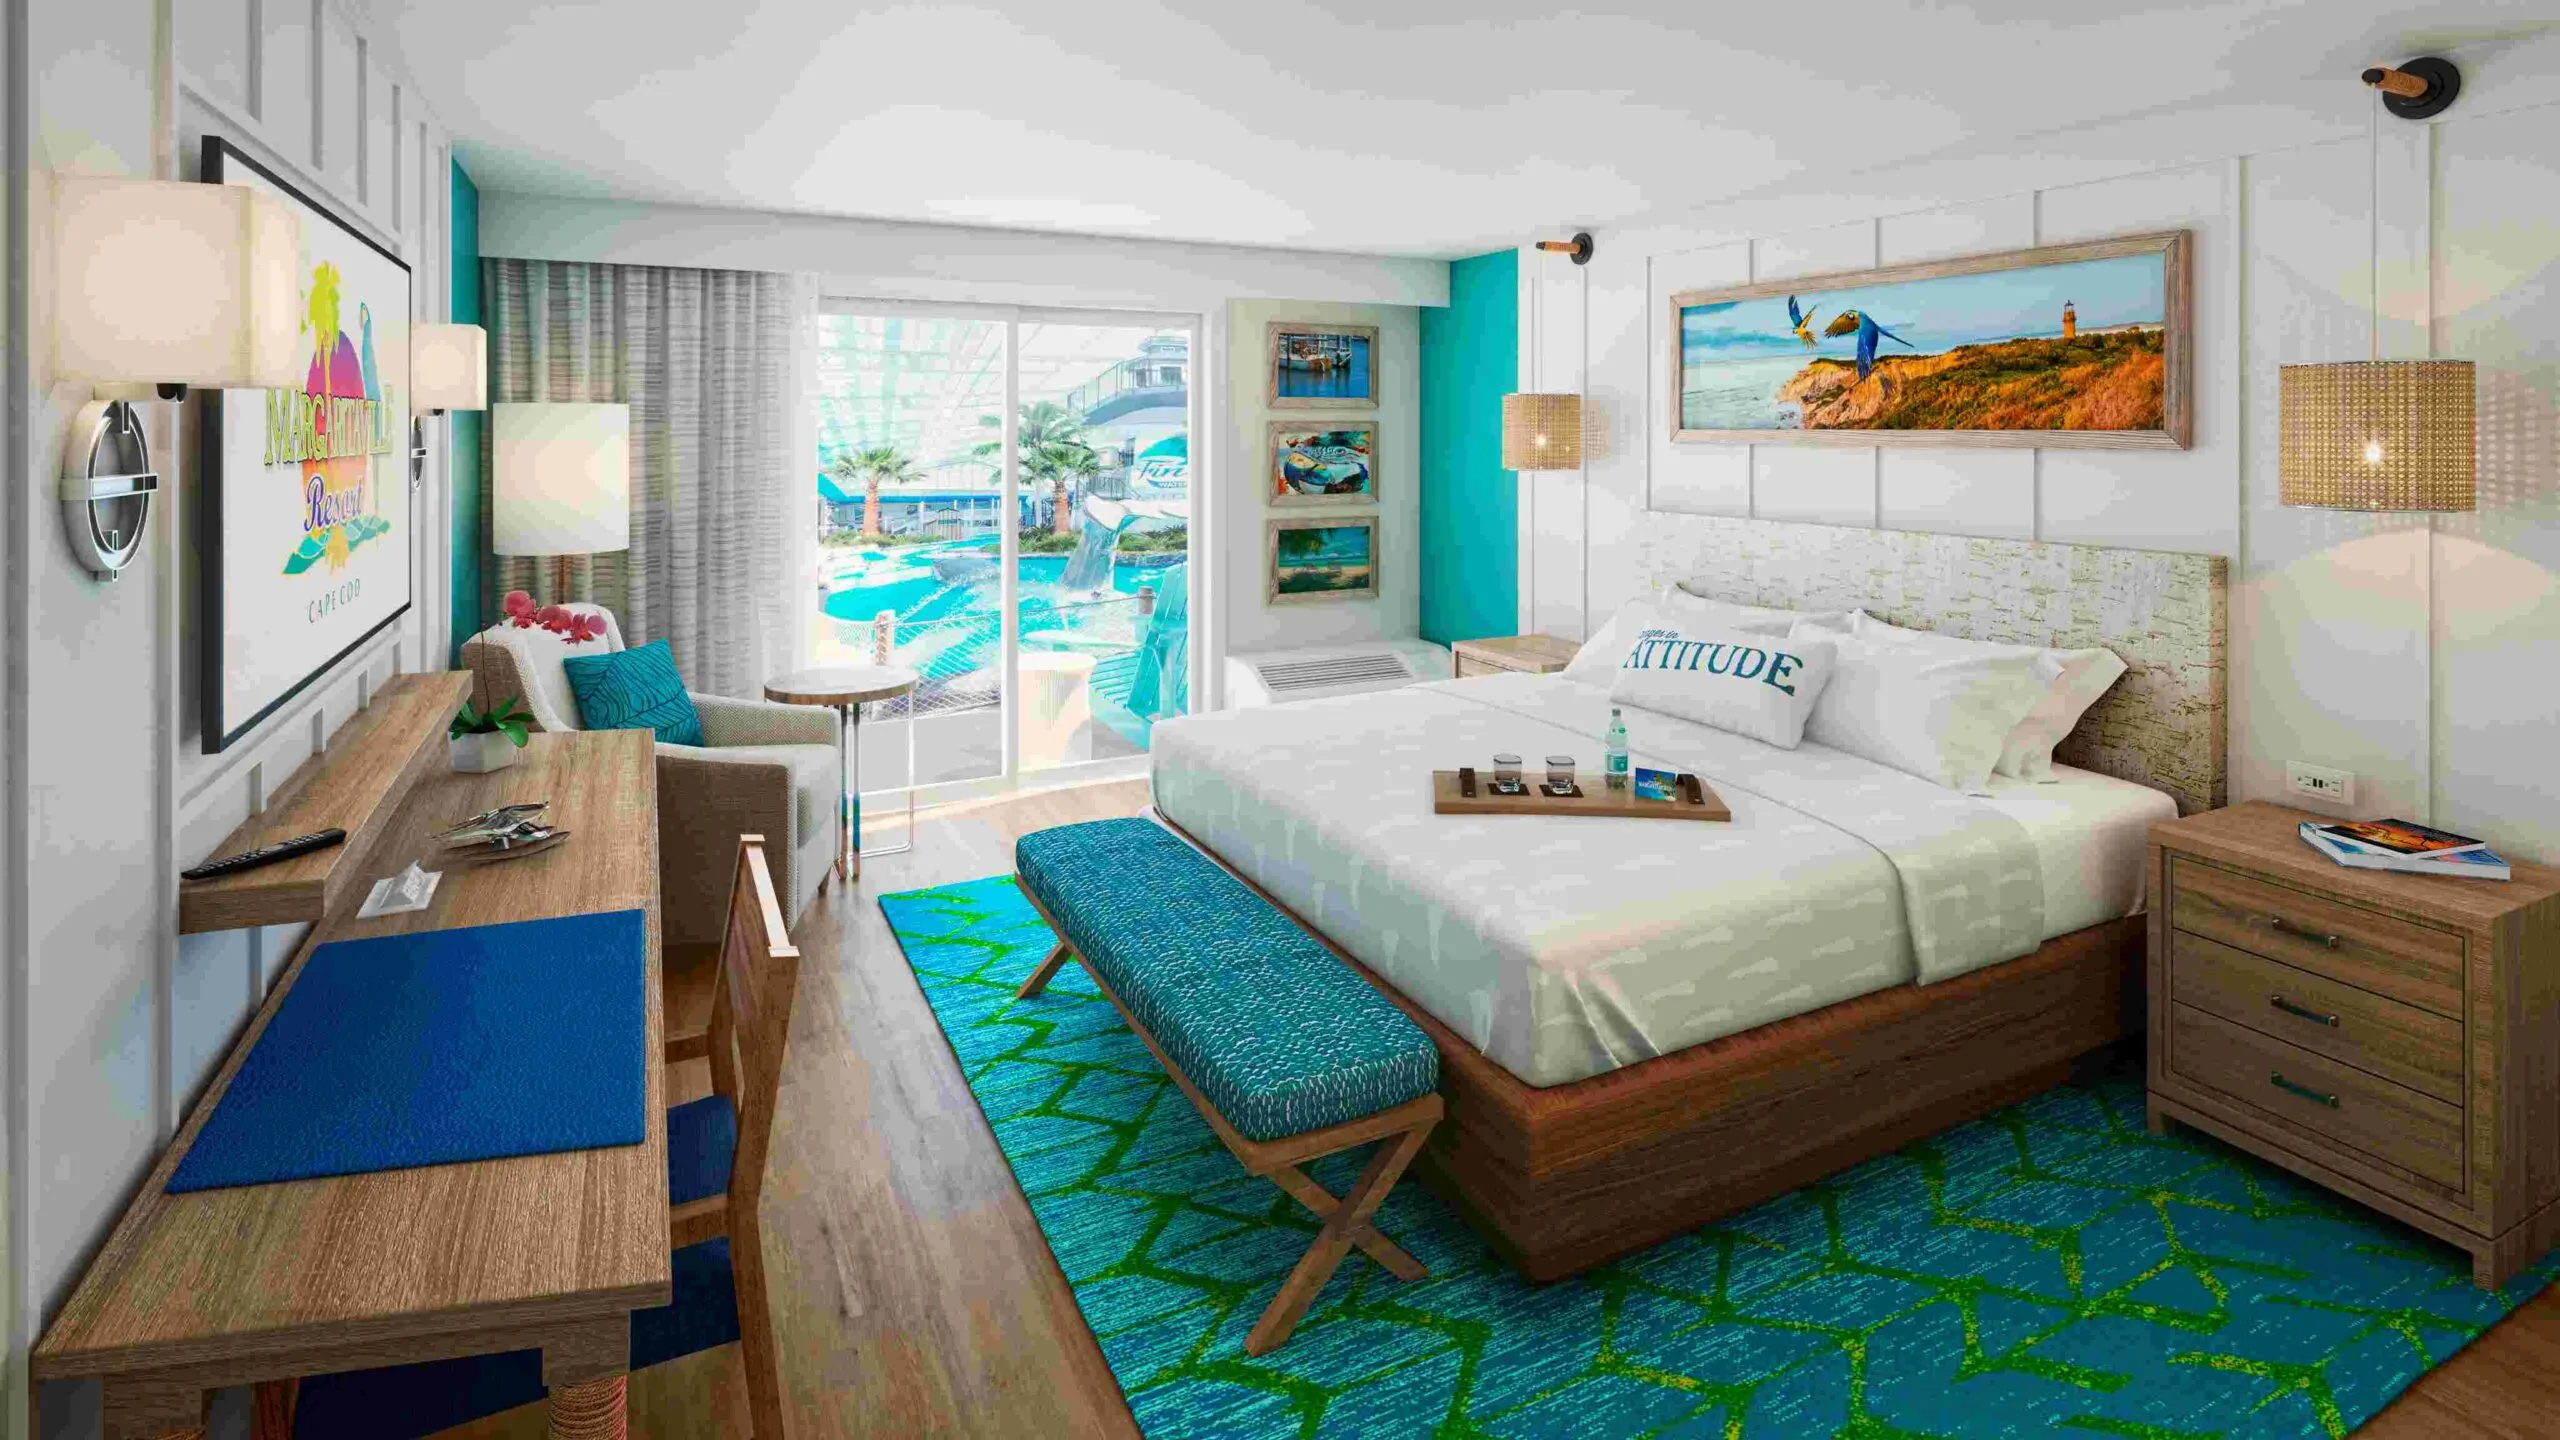 Margaritaville Resort Set To Open On Cape Cod